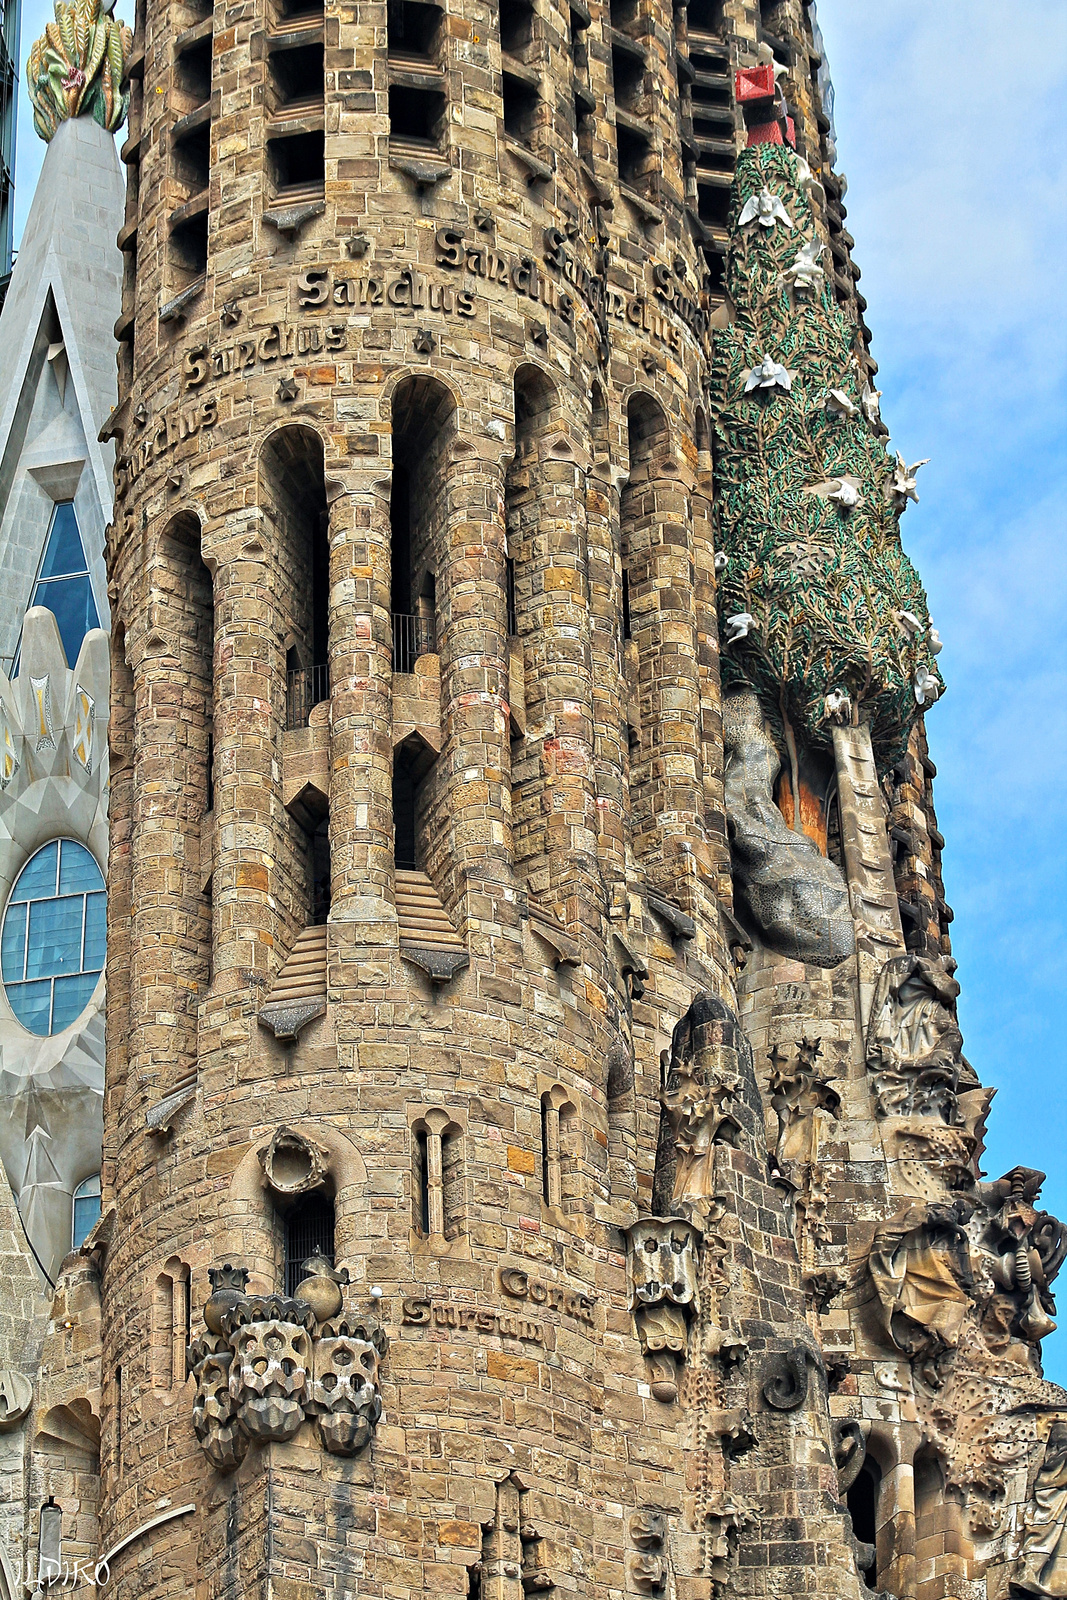 Sagrada Familia - Barcelona 0325